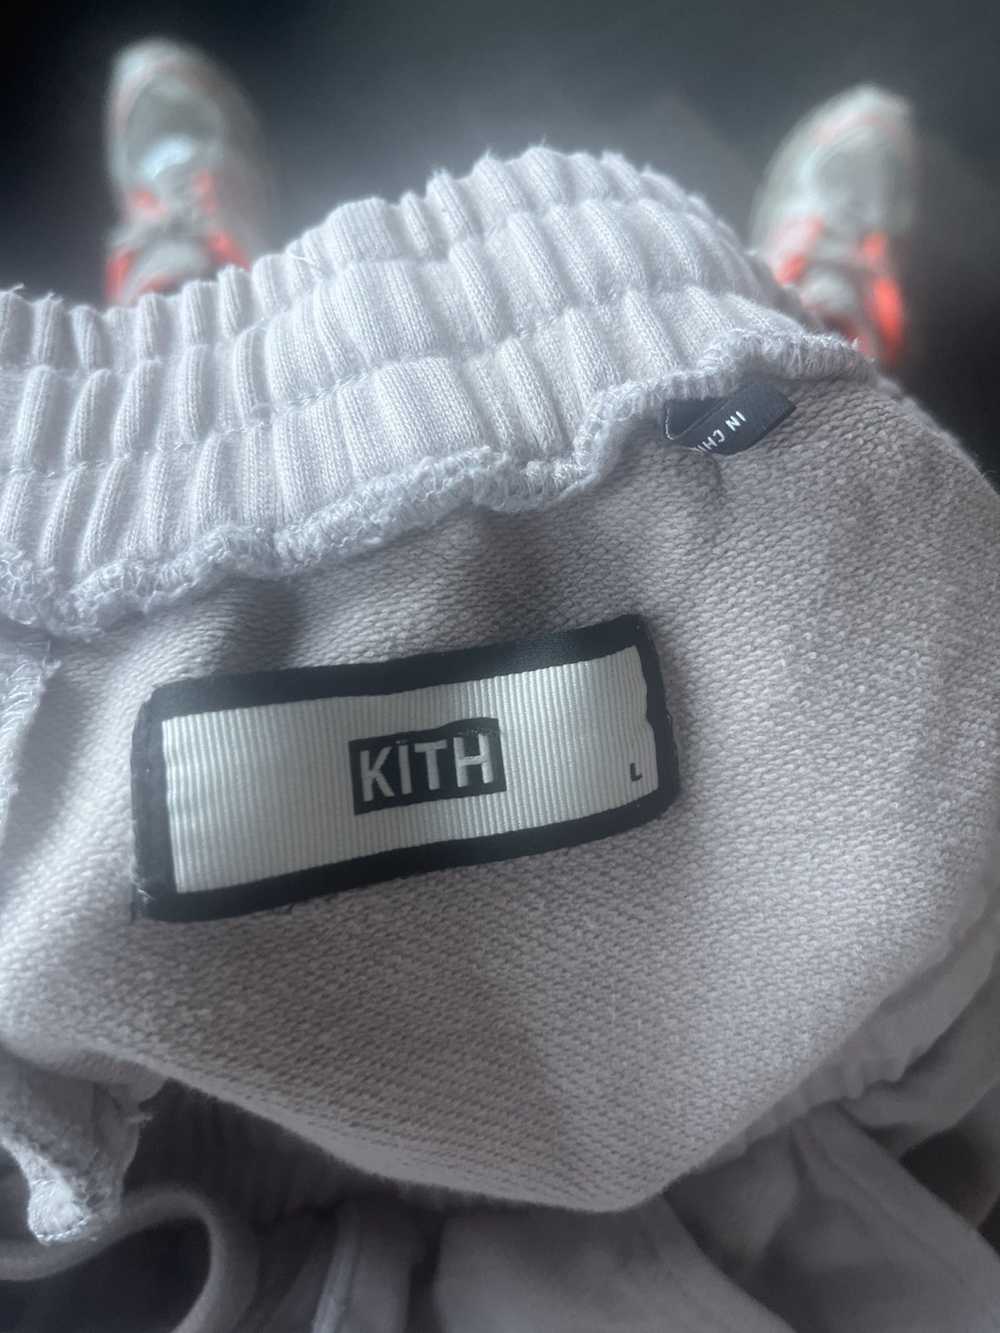 Kith kith sweat pant - image 7